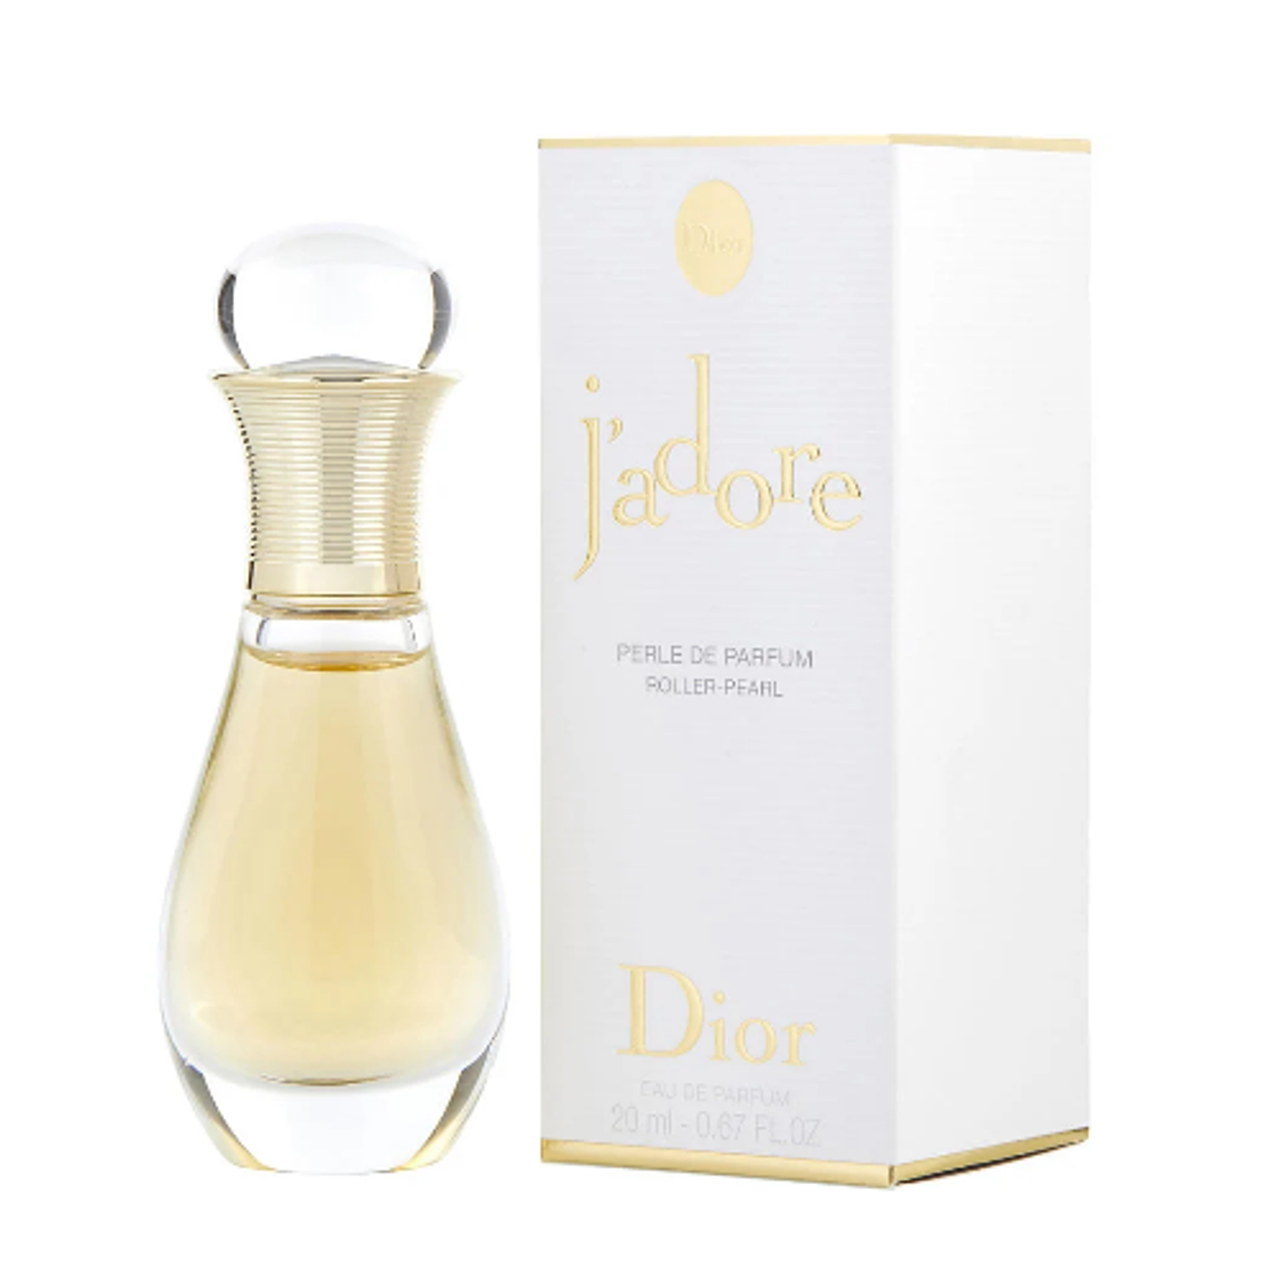 J'adore Eau de Parfum Roller-Pearl - Dior